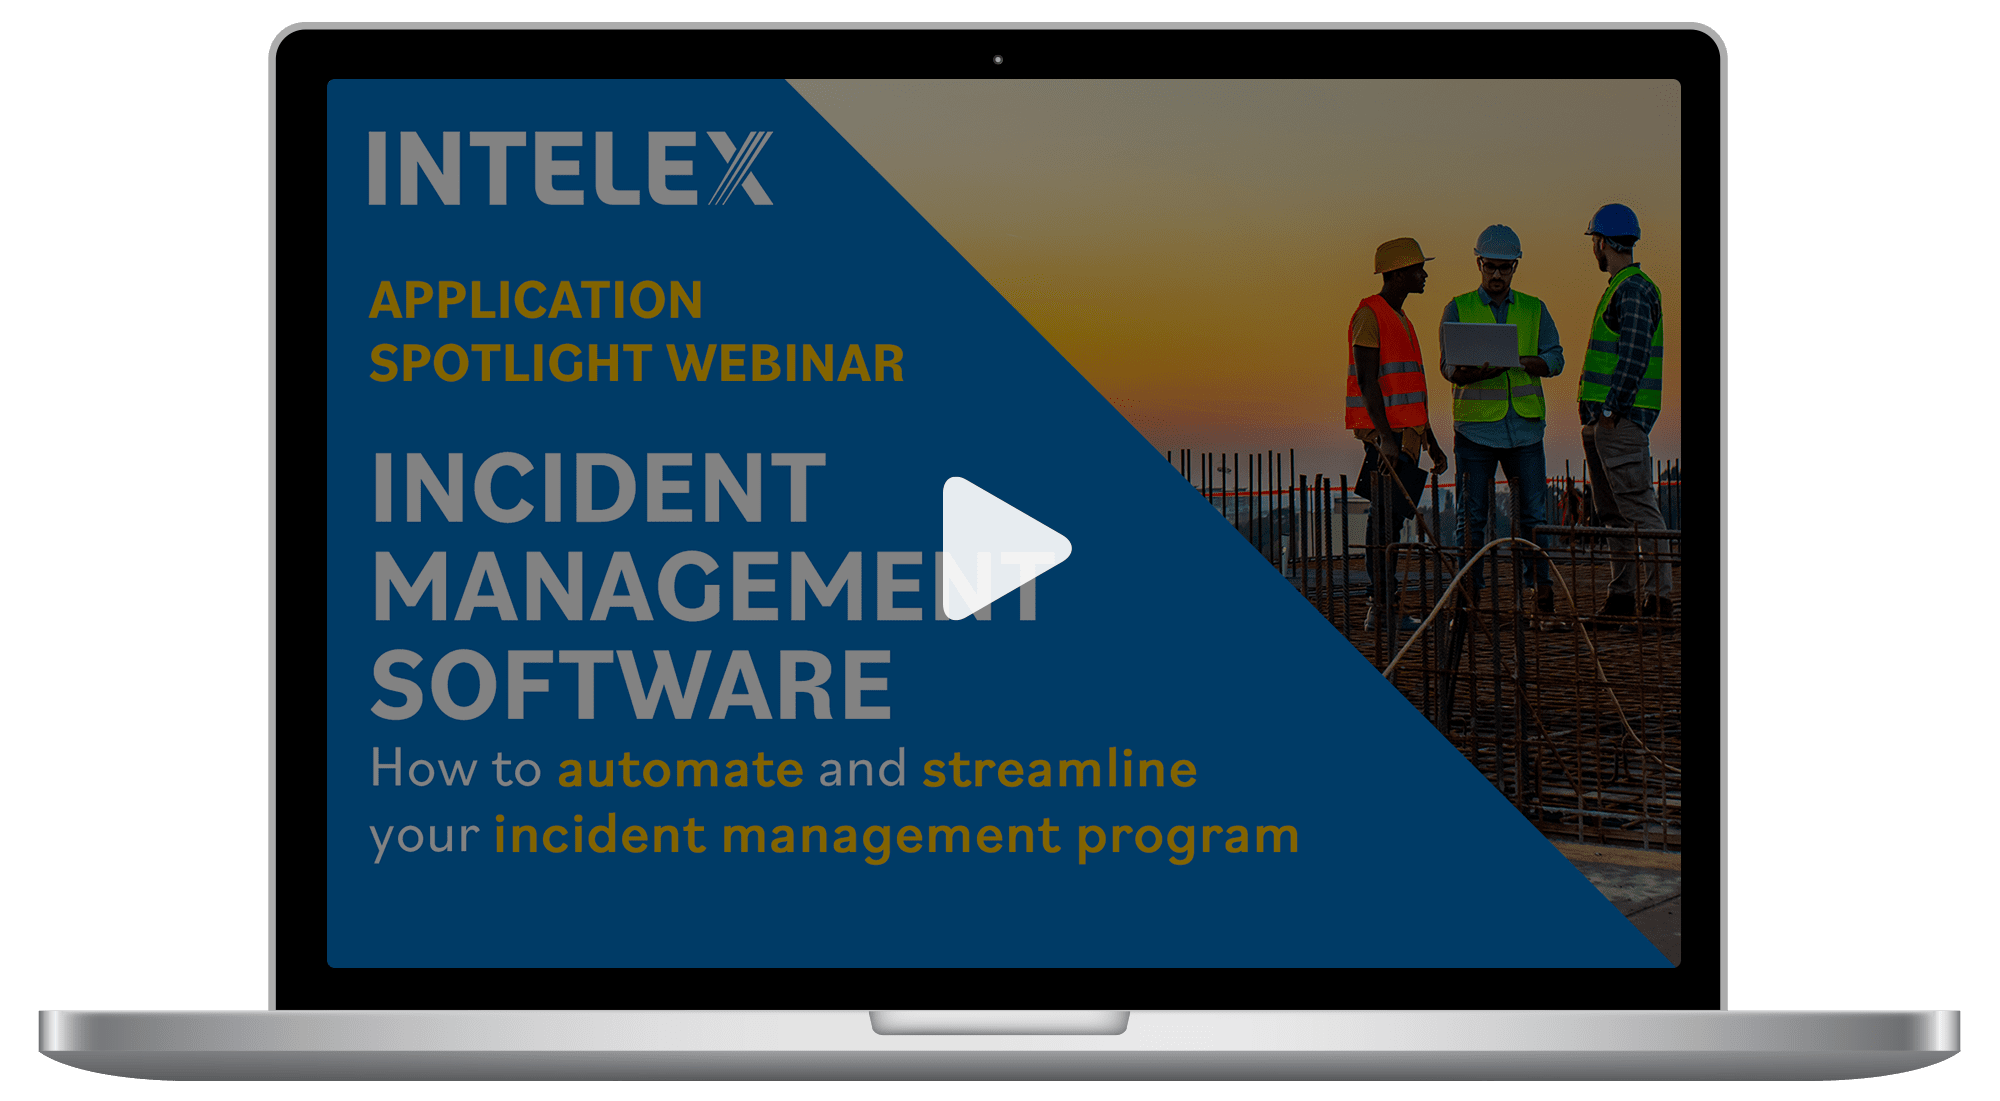 Incident Management Software Demo - Intelex